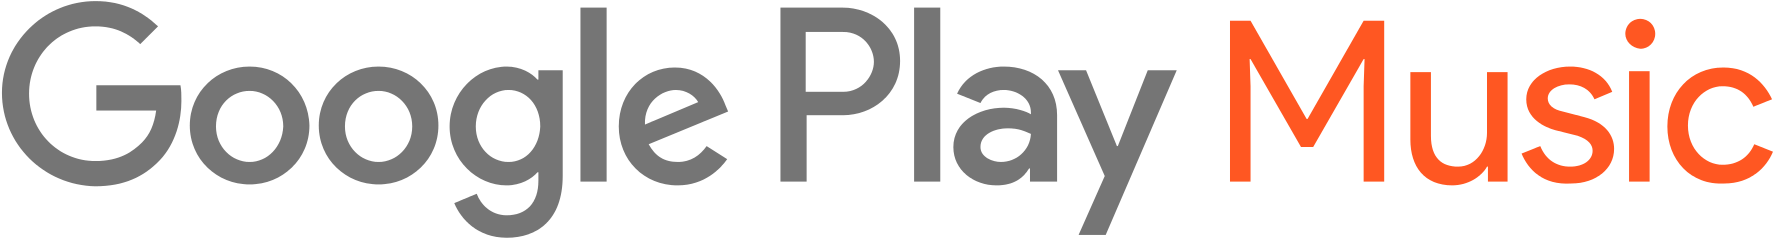 Google Play Music Logo PNG